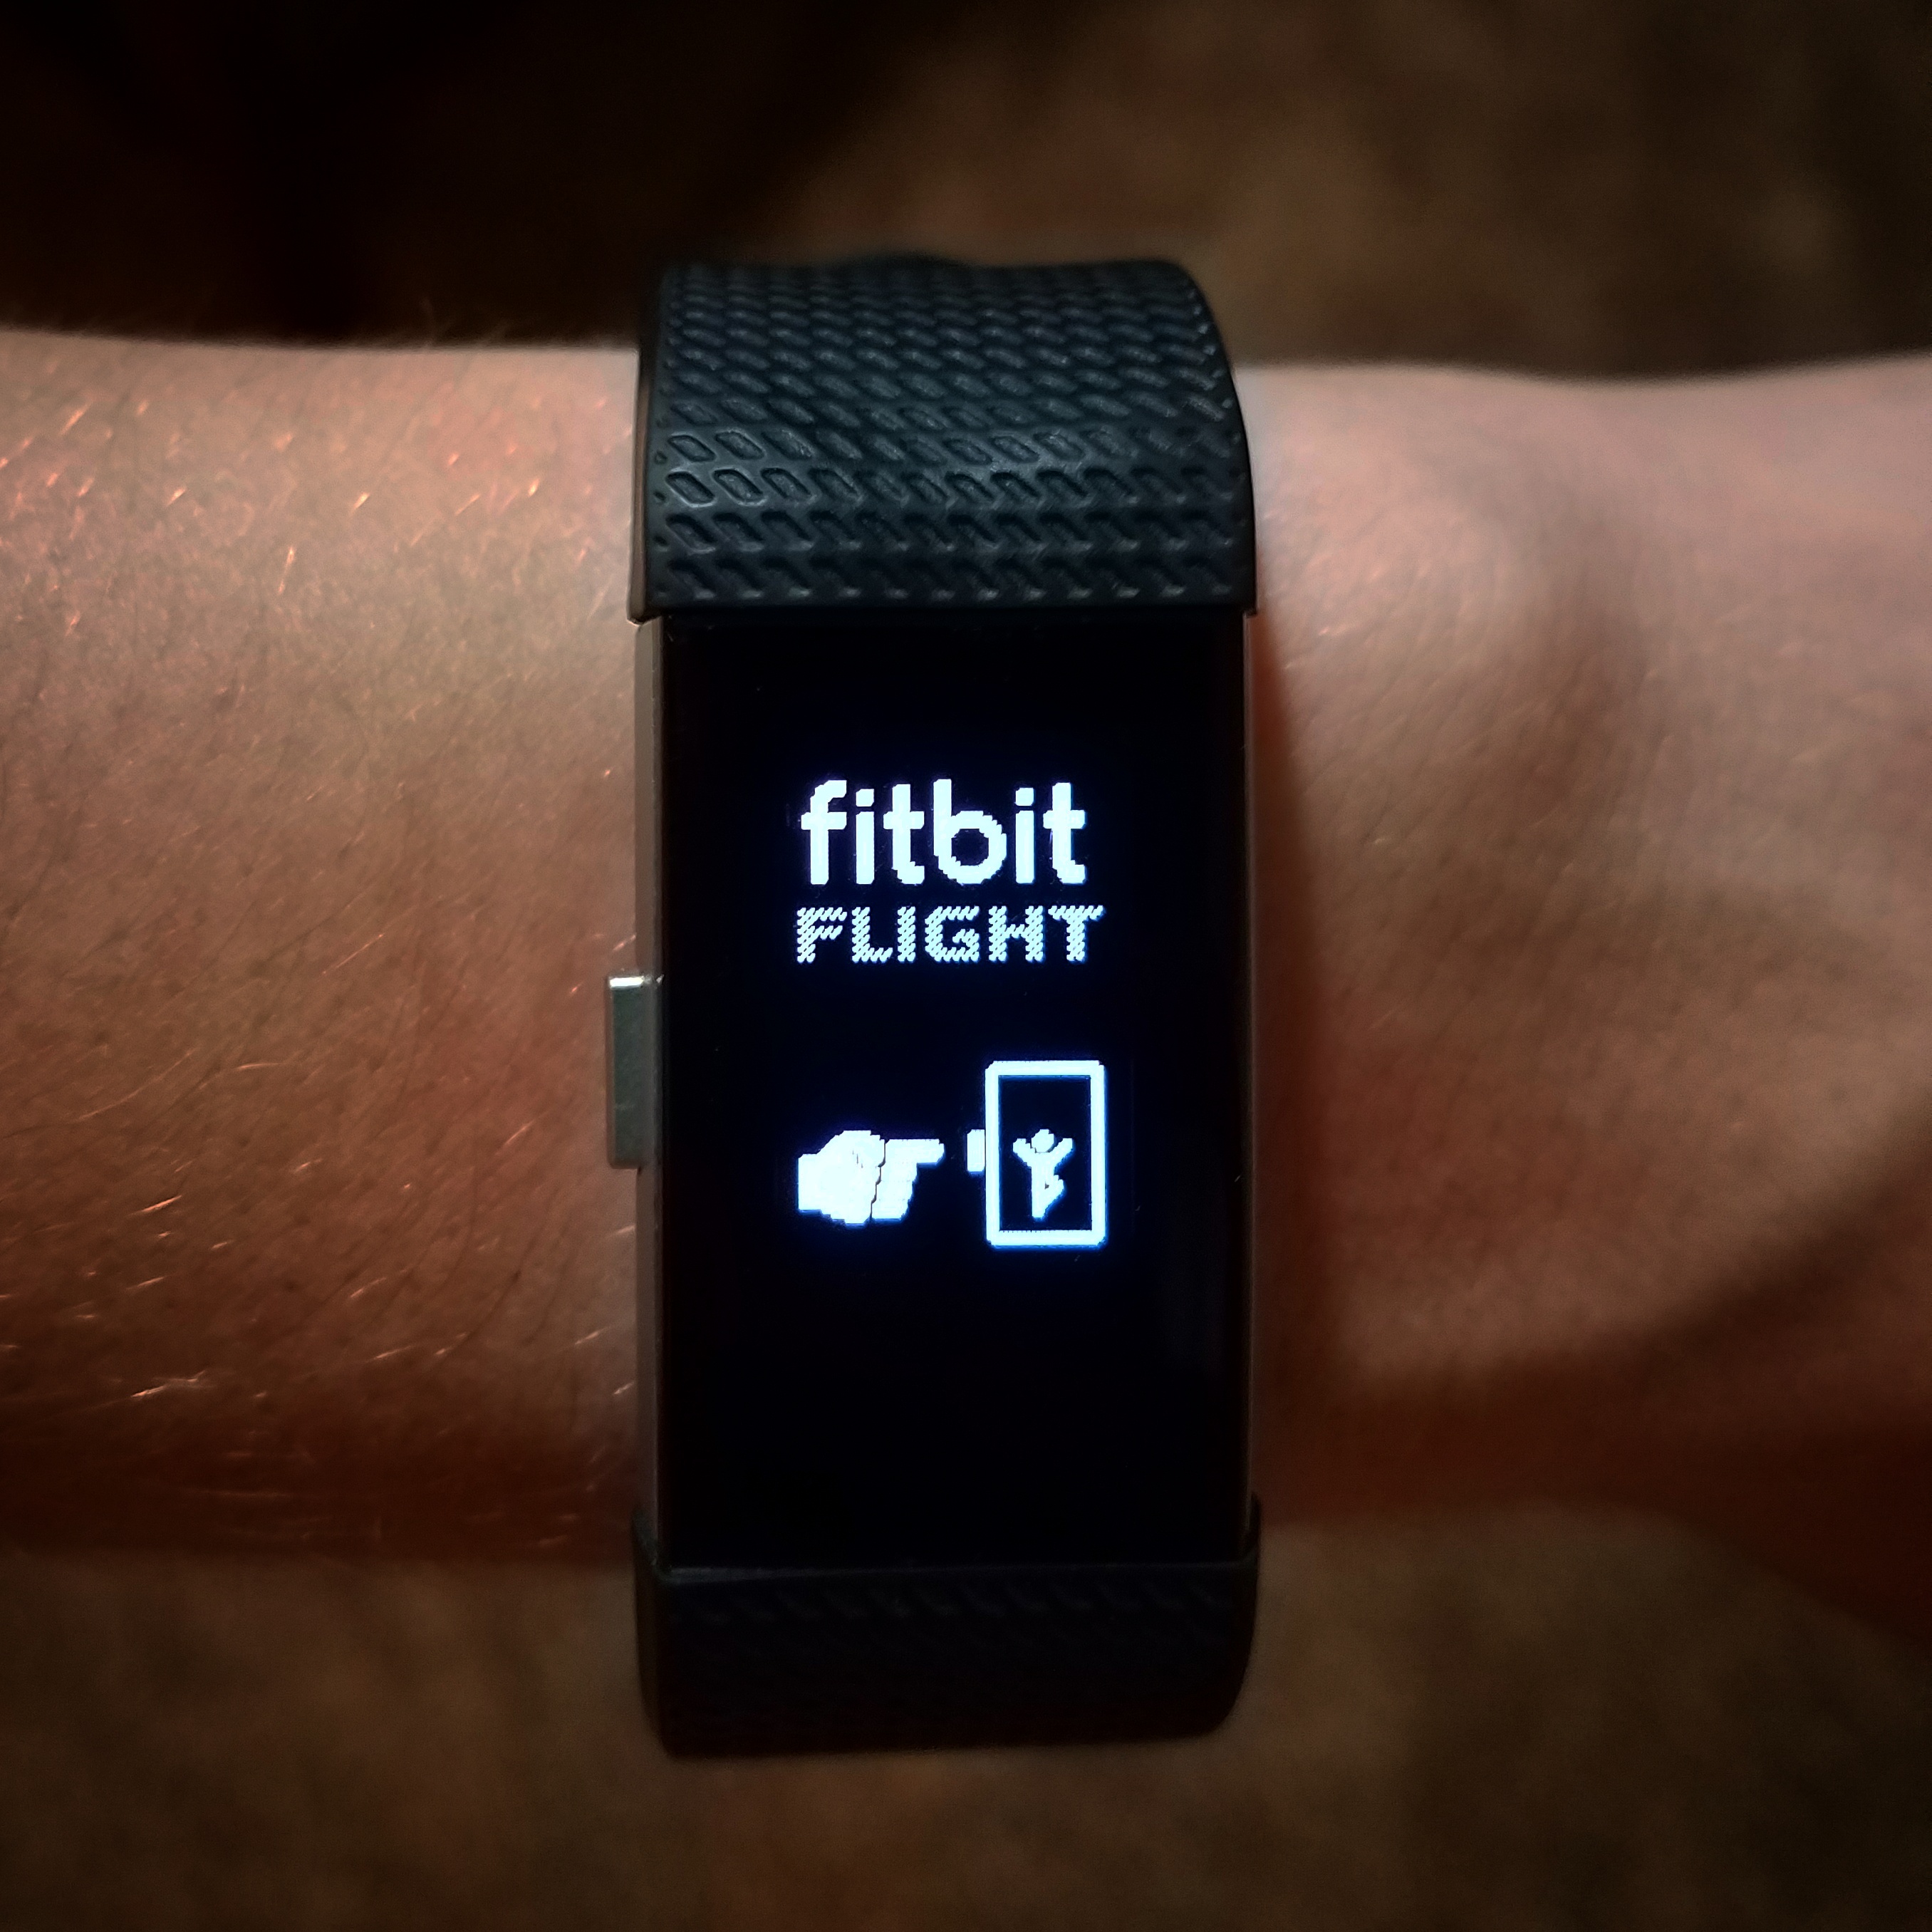 Fitbit Flight game - Fitbit Community